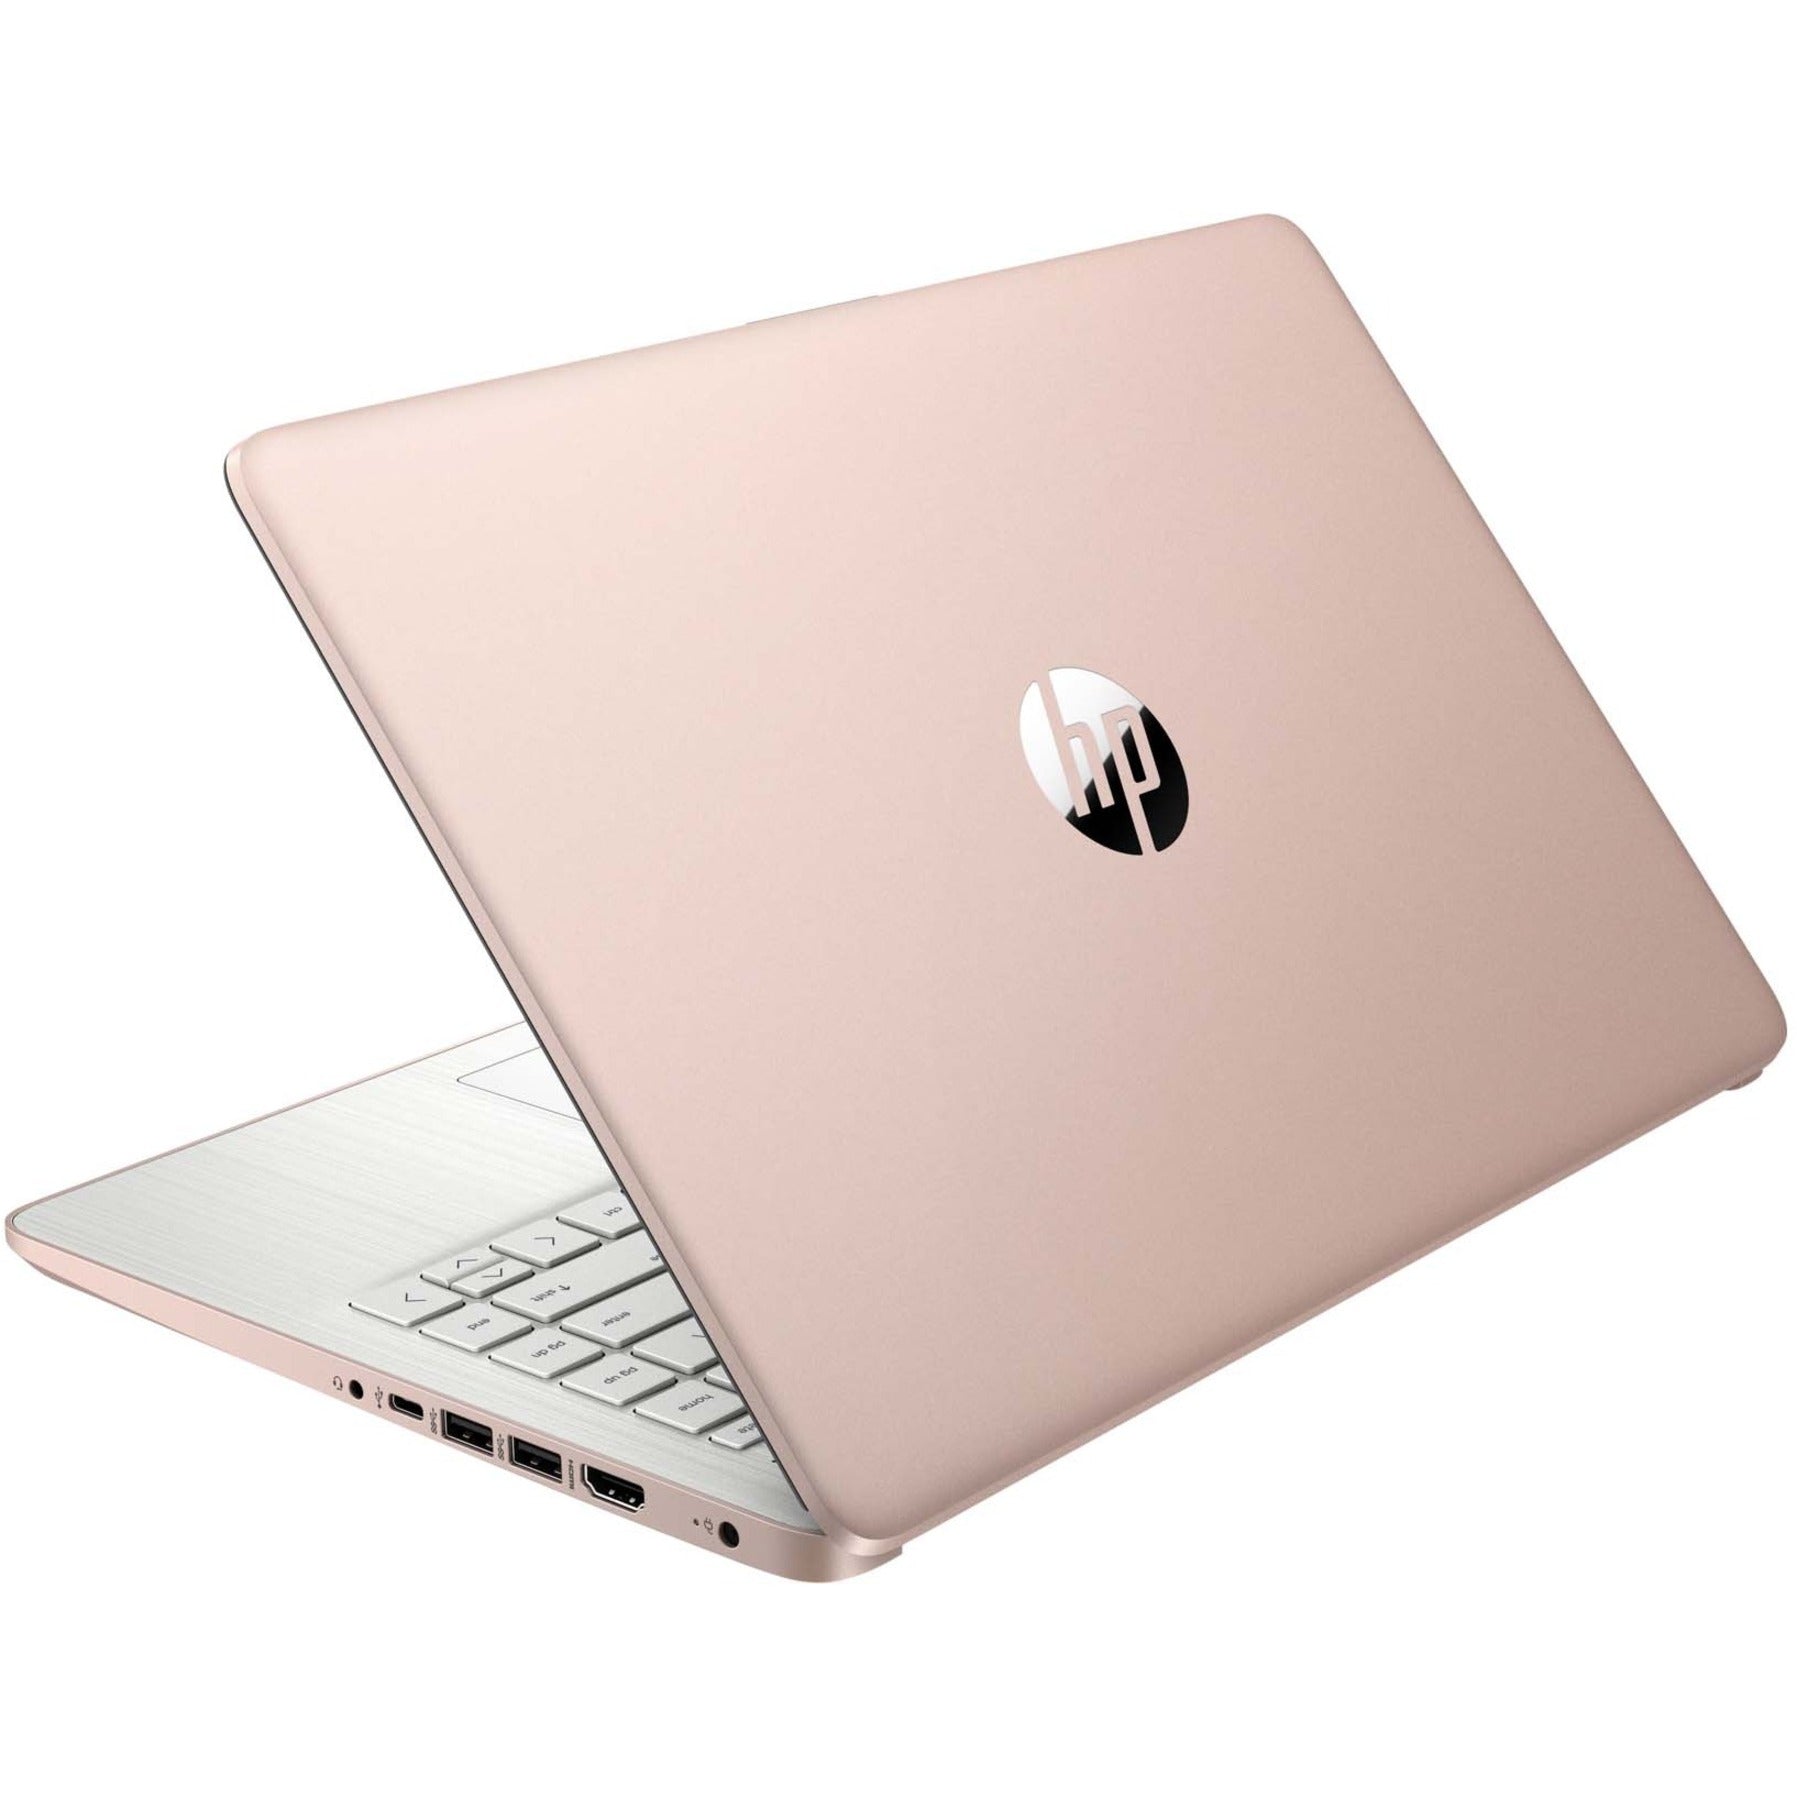 HP Laptop 14-dq0070nr 14" Touchscreen Notebook, Intel Celeron N4020, 4GB RAM, 64GB Flash Memory, Windows 10 Home in S mode